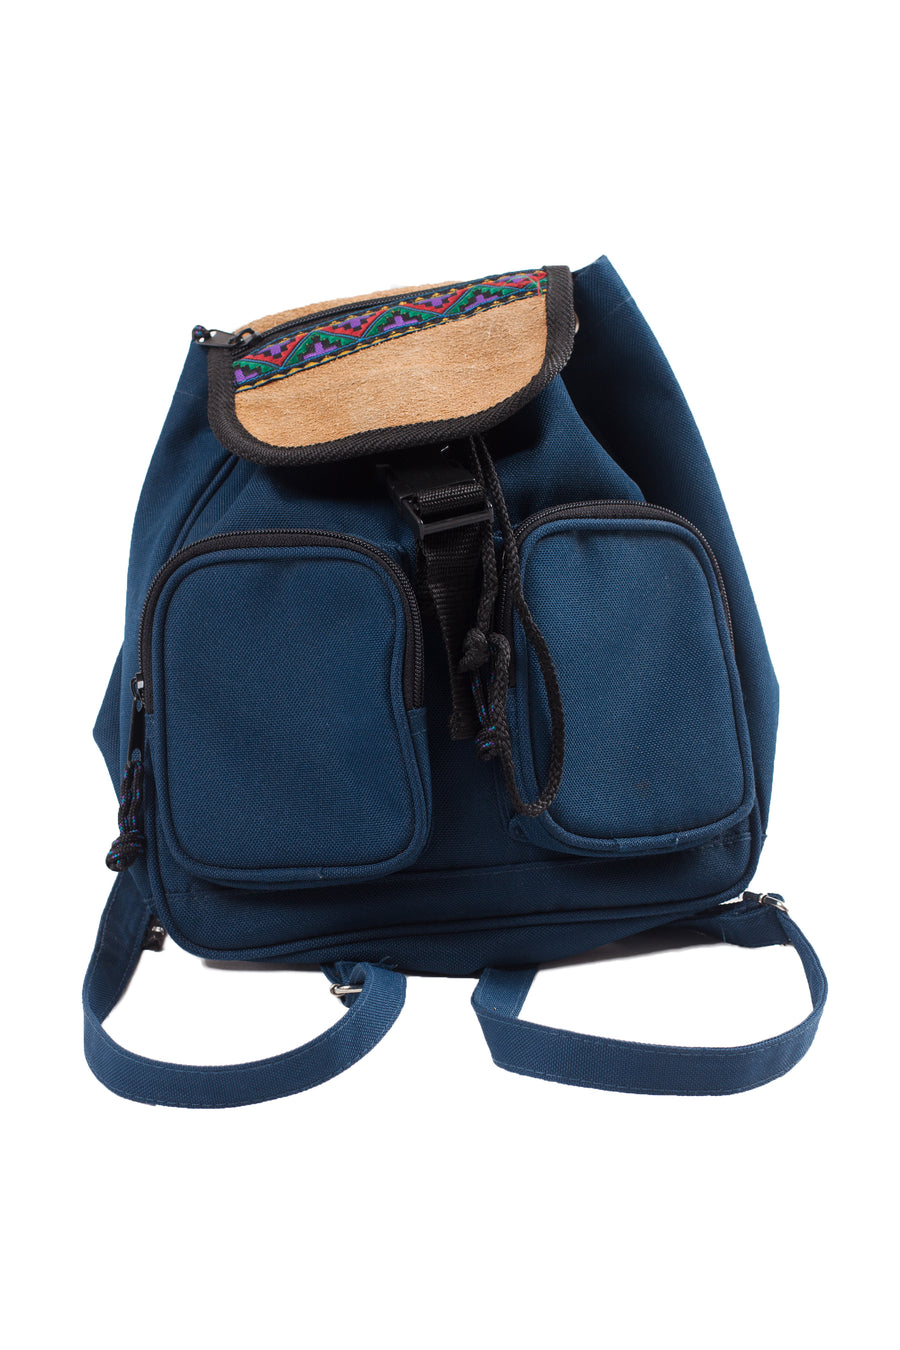 90s baby backpack. | Backpack purse, Suede backpack, Backpacks